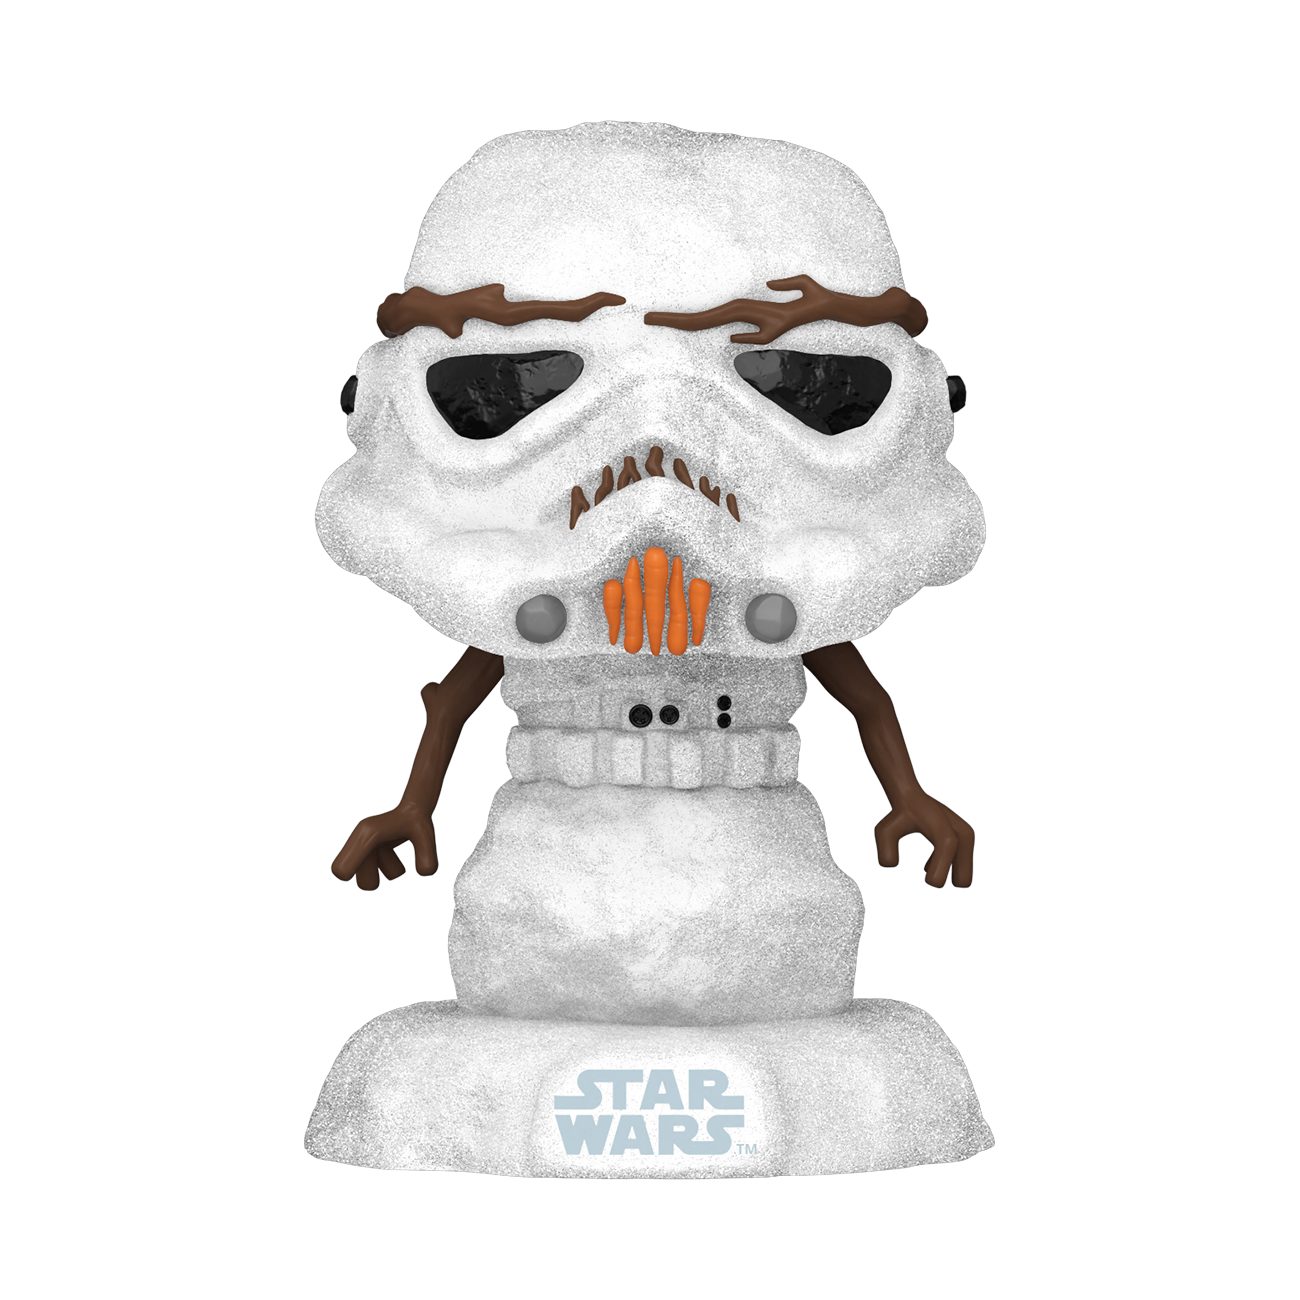 Funko Wars: Star Funko Holiday POP! #557 Actionfigur Snowman - Stormtrooper